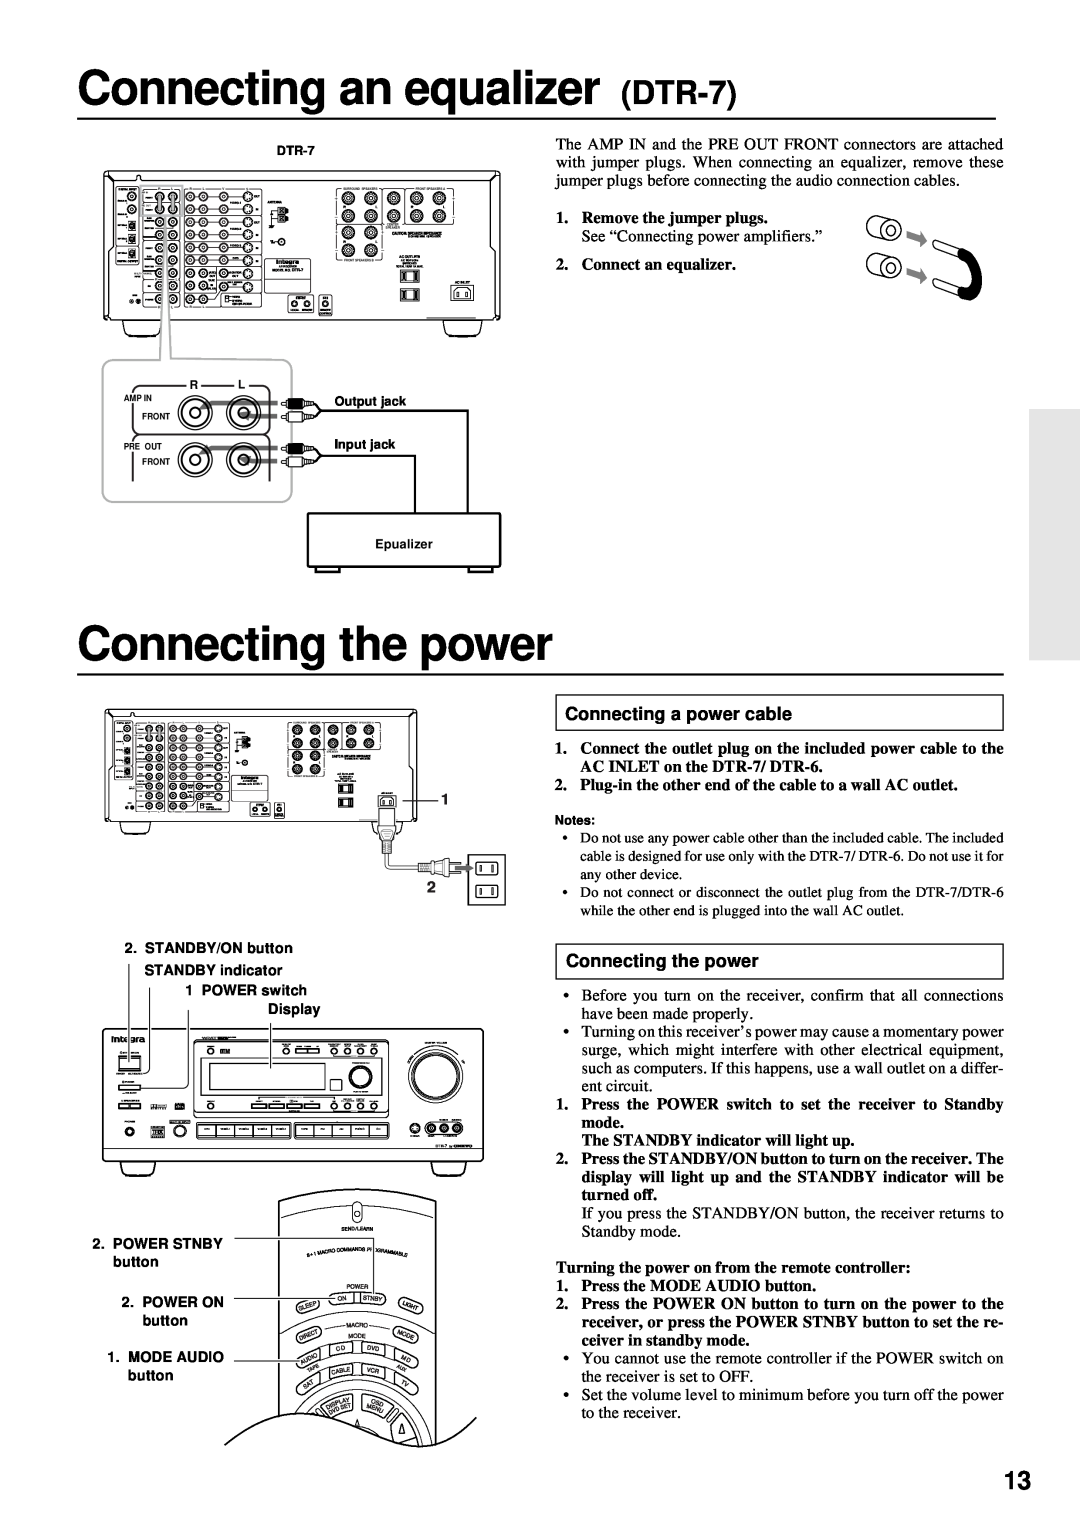 Integra instruction manual Connecting an equalizer DTR-7, Connecting the power, Connecting a power cable 